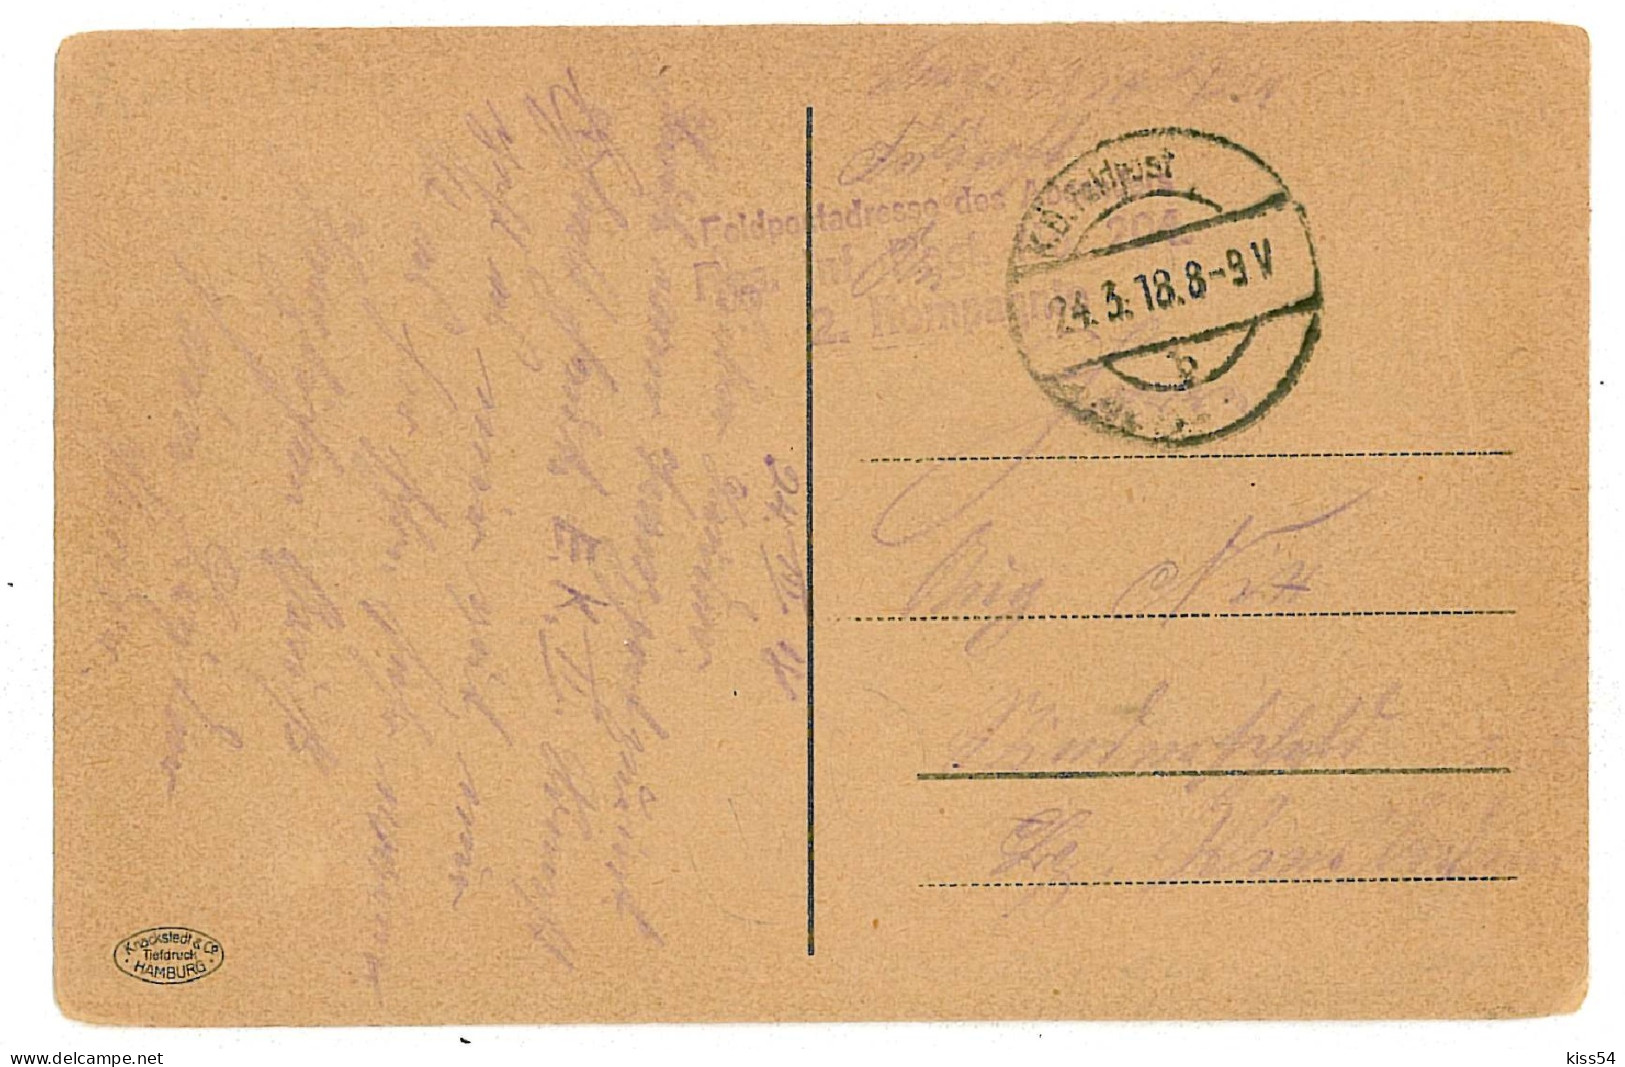 RO 40 - 1271 GALATI, Centrul, Caruta Si Trasuri, Romania - Old Postcard, CENSOR - Used - 1918 - Rumänien